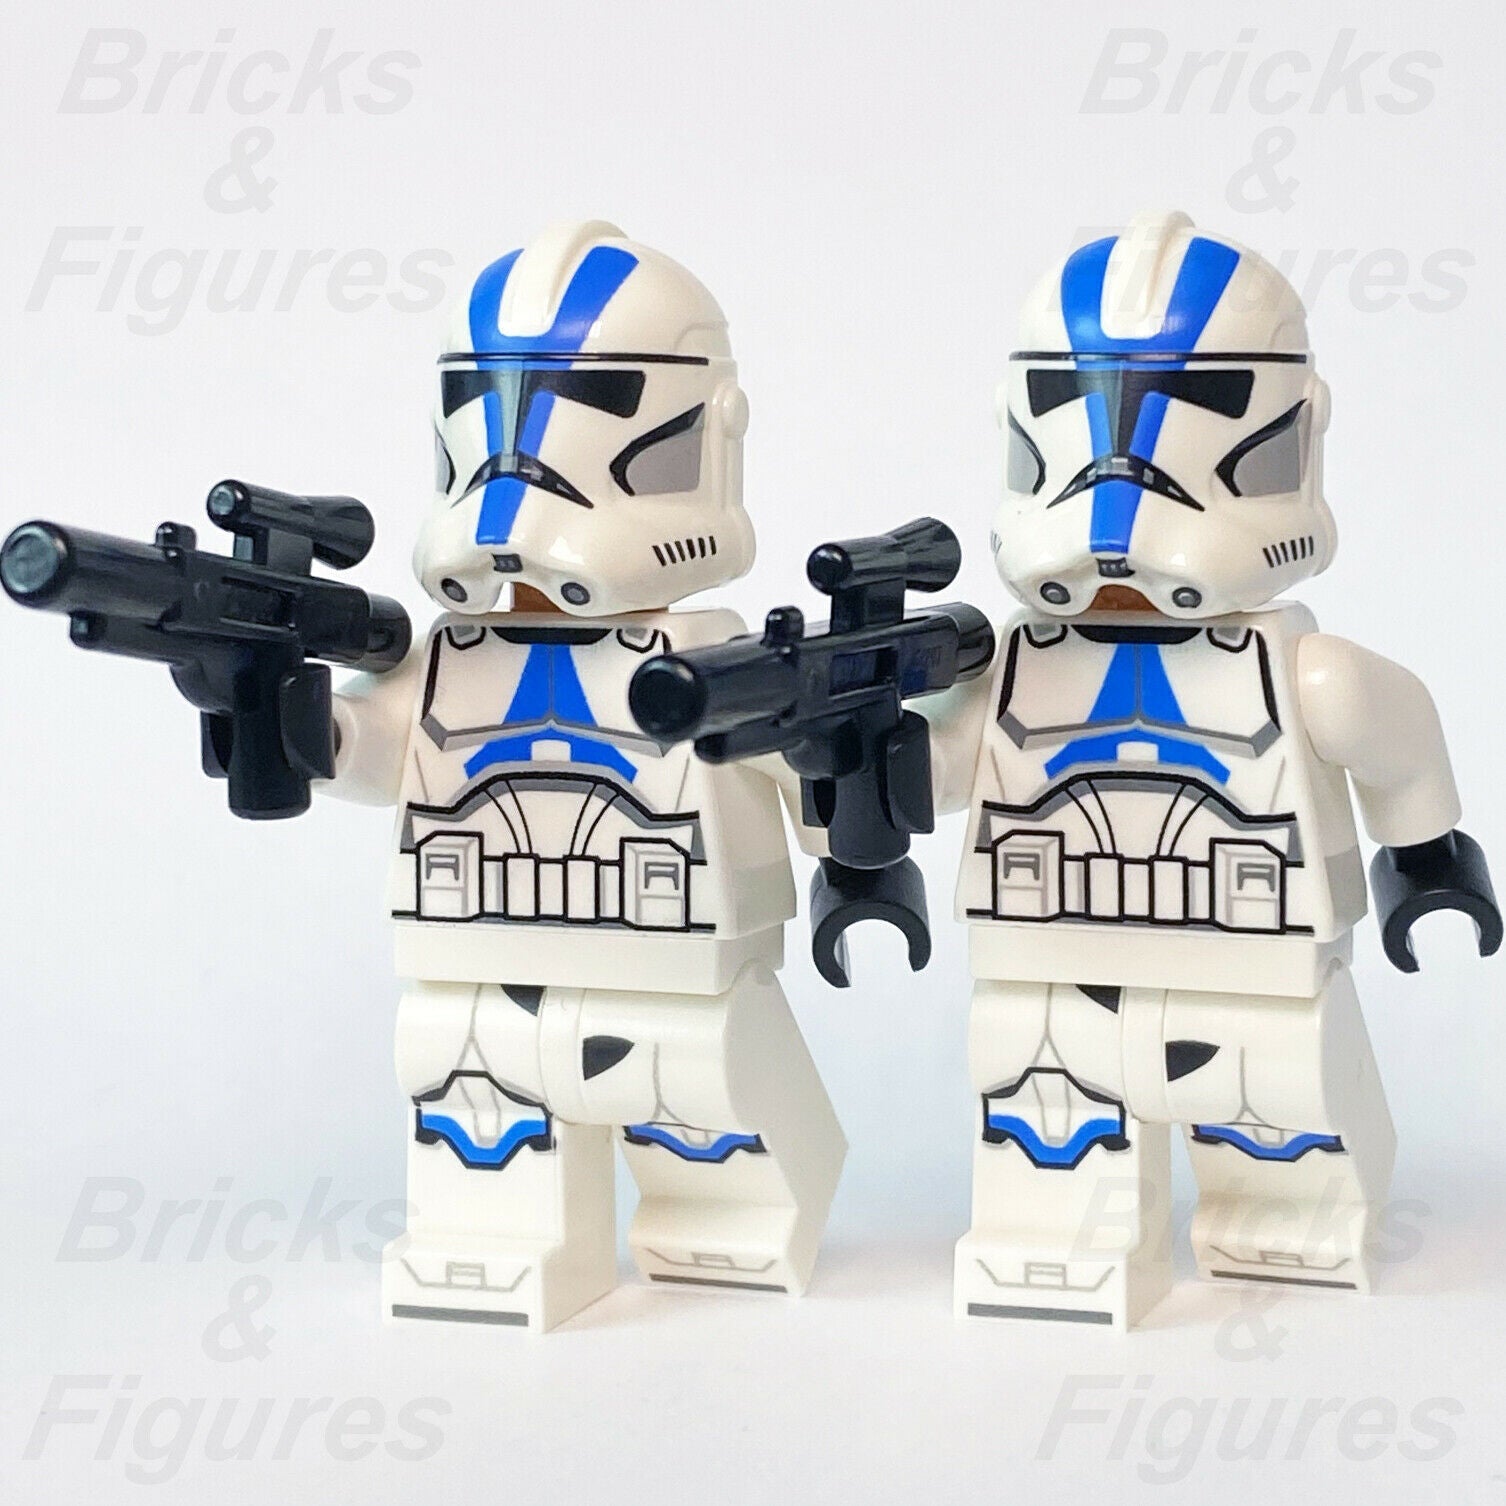 2 x New Star Wars LEGO 501st Legion Clone Trooper Episode 3 Minifigures 75280 2